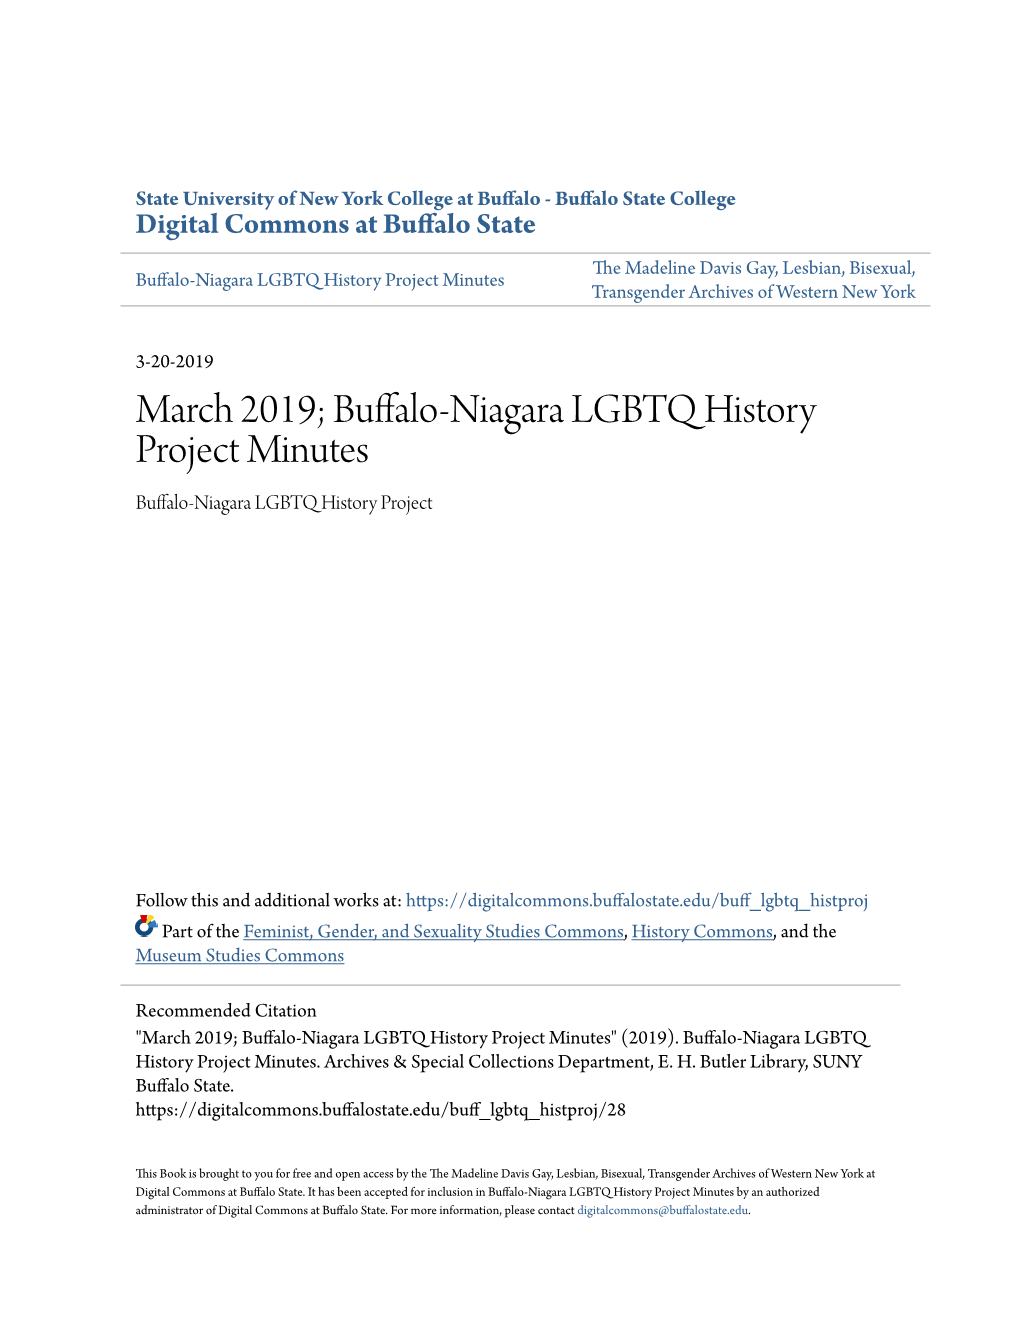 Buffalo-Niagara LGBTQ History Project Minutes Transgender Archives of Western New York